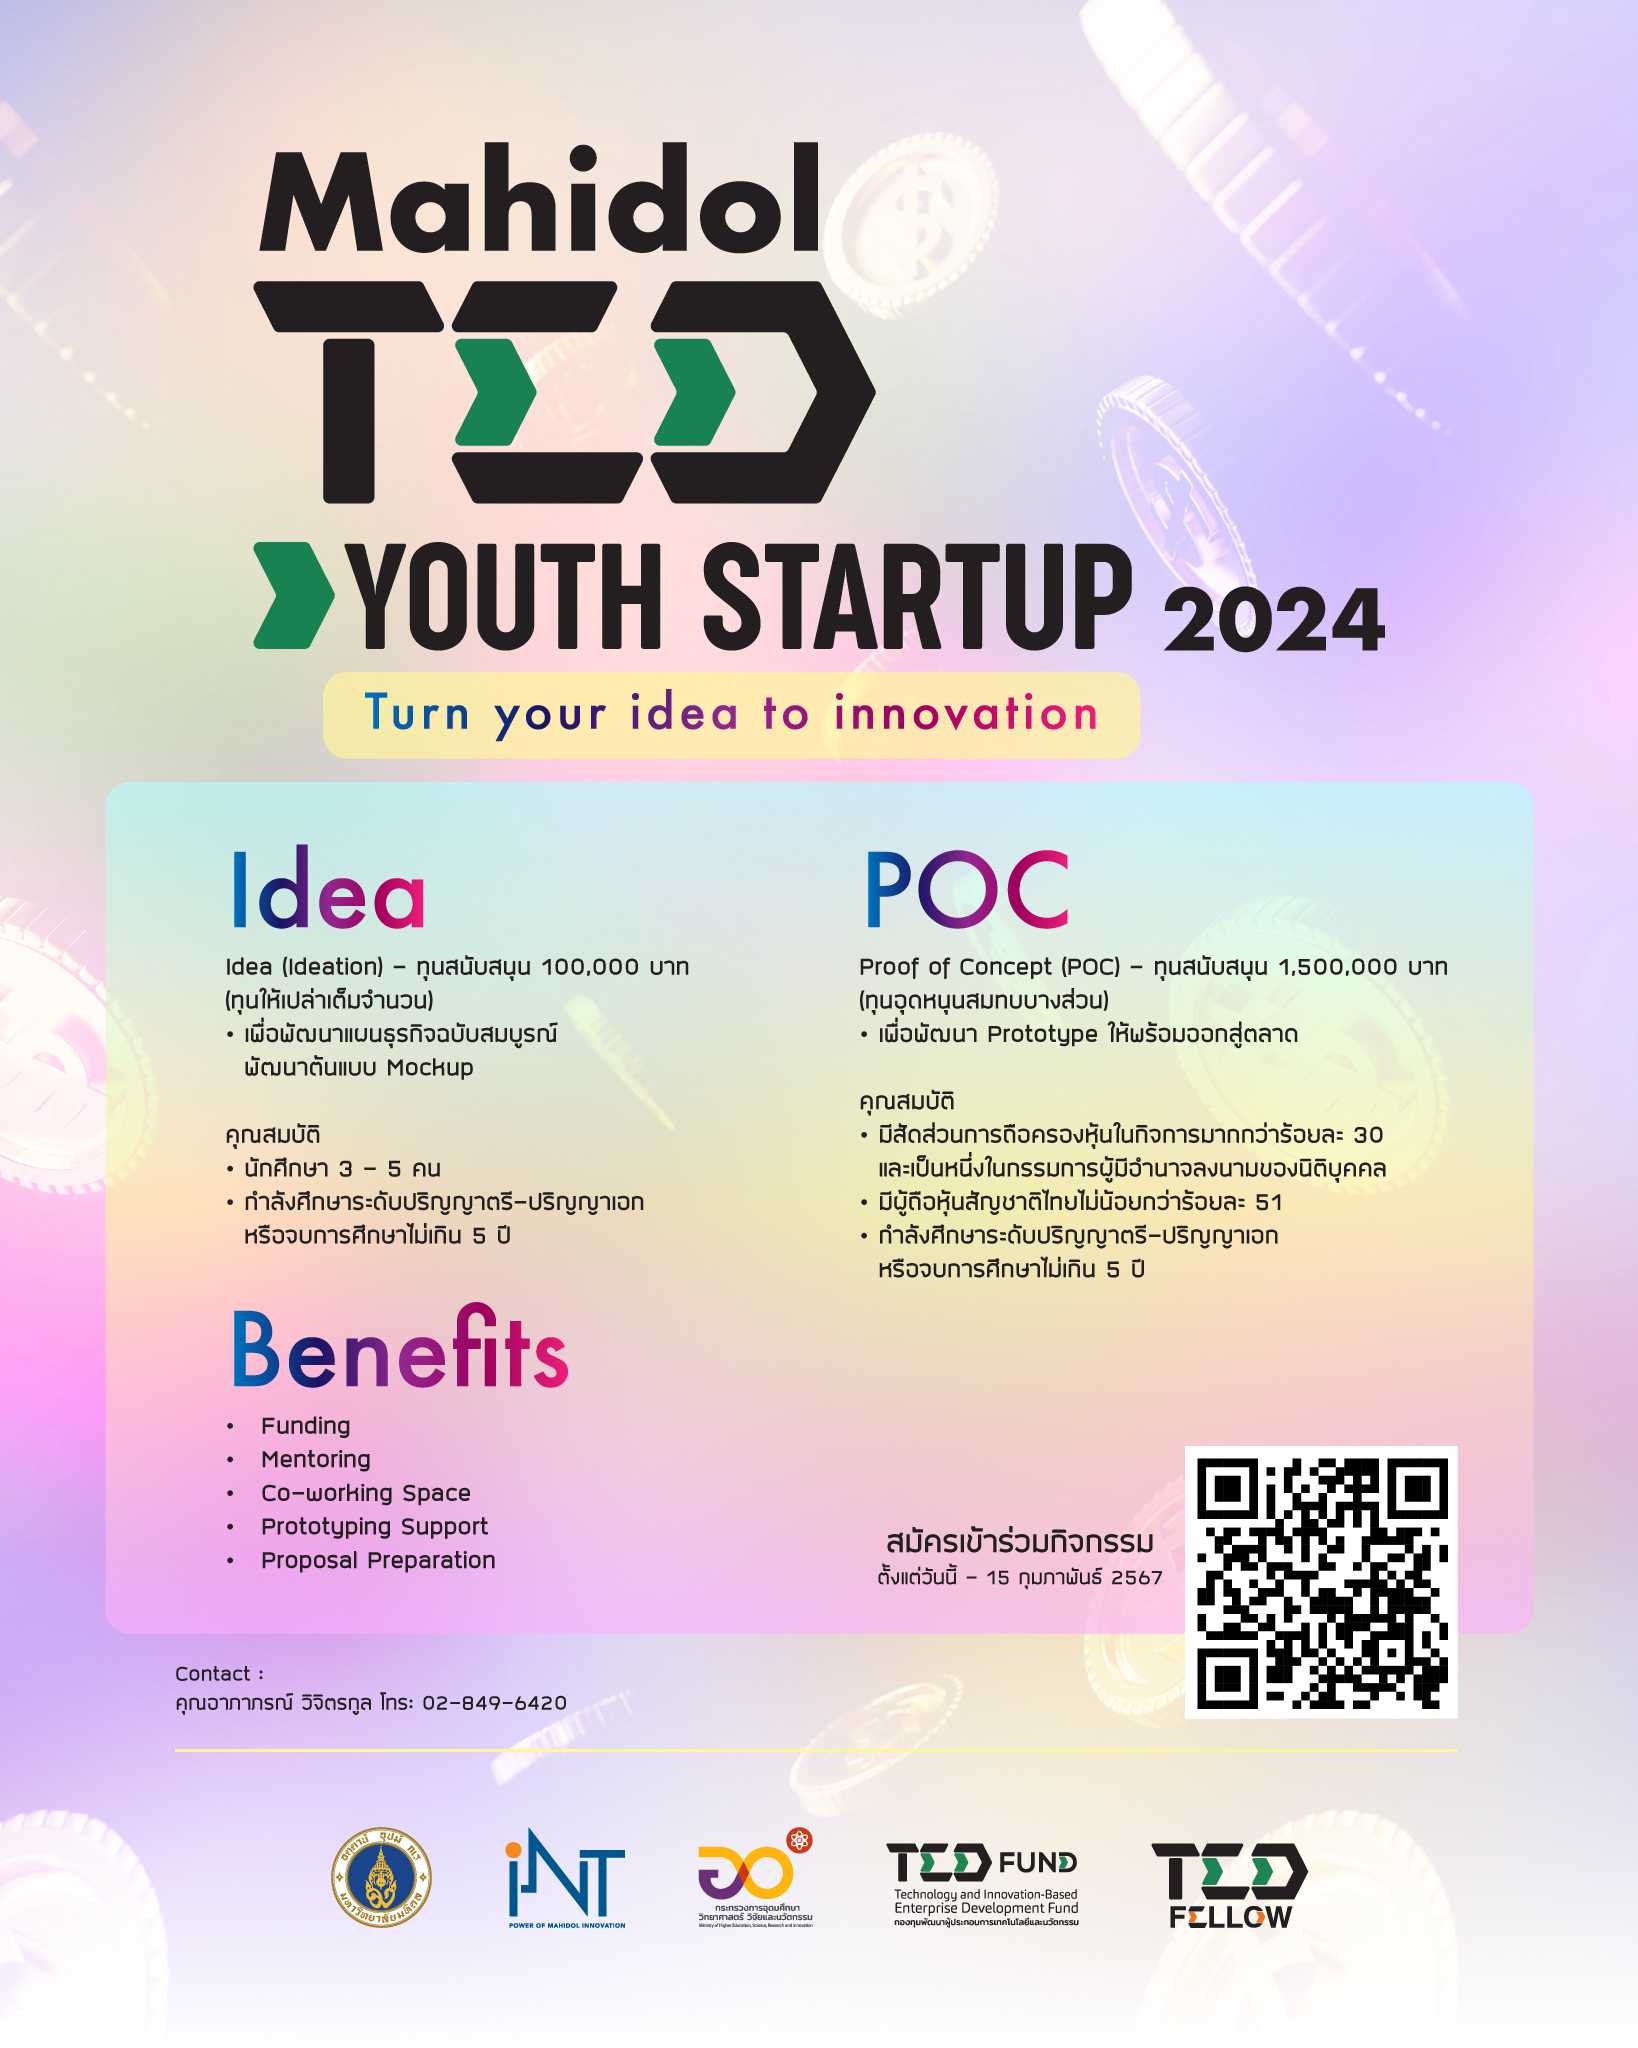 Mahidol TED Youth Startup 2024